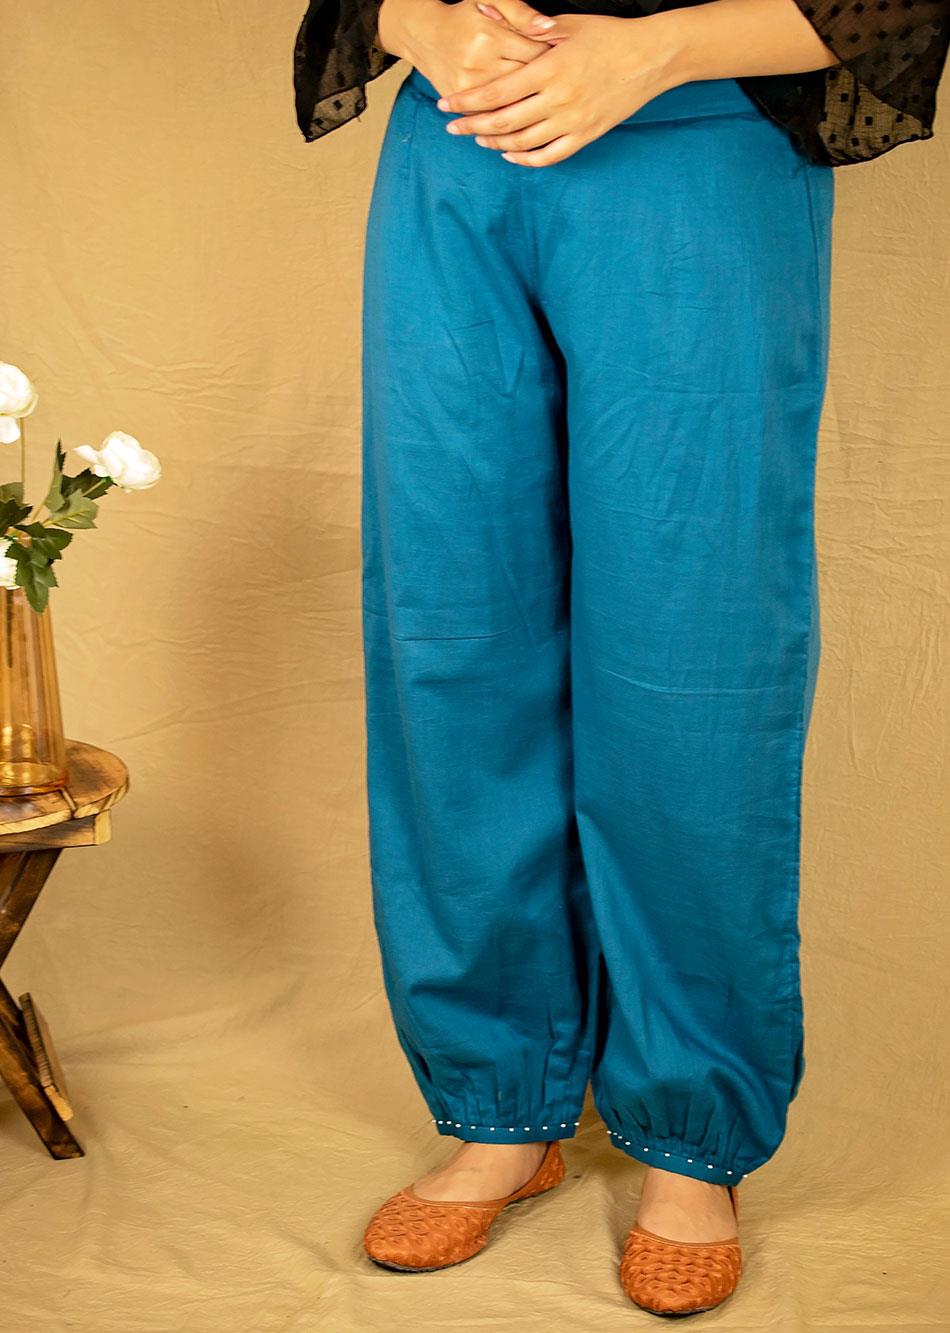 Teal Afghani Pants By Jovi Fashion